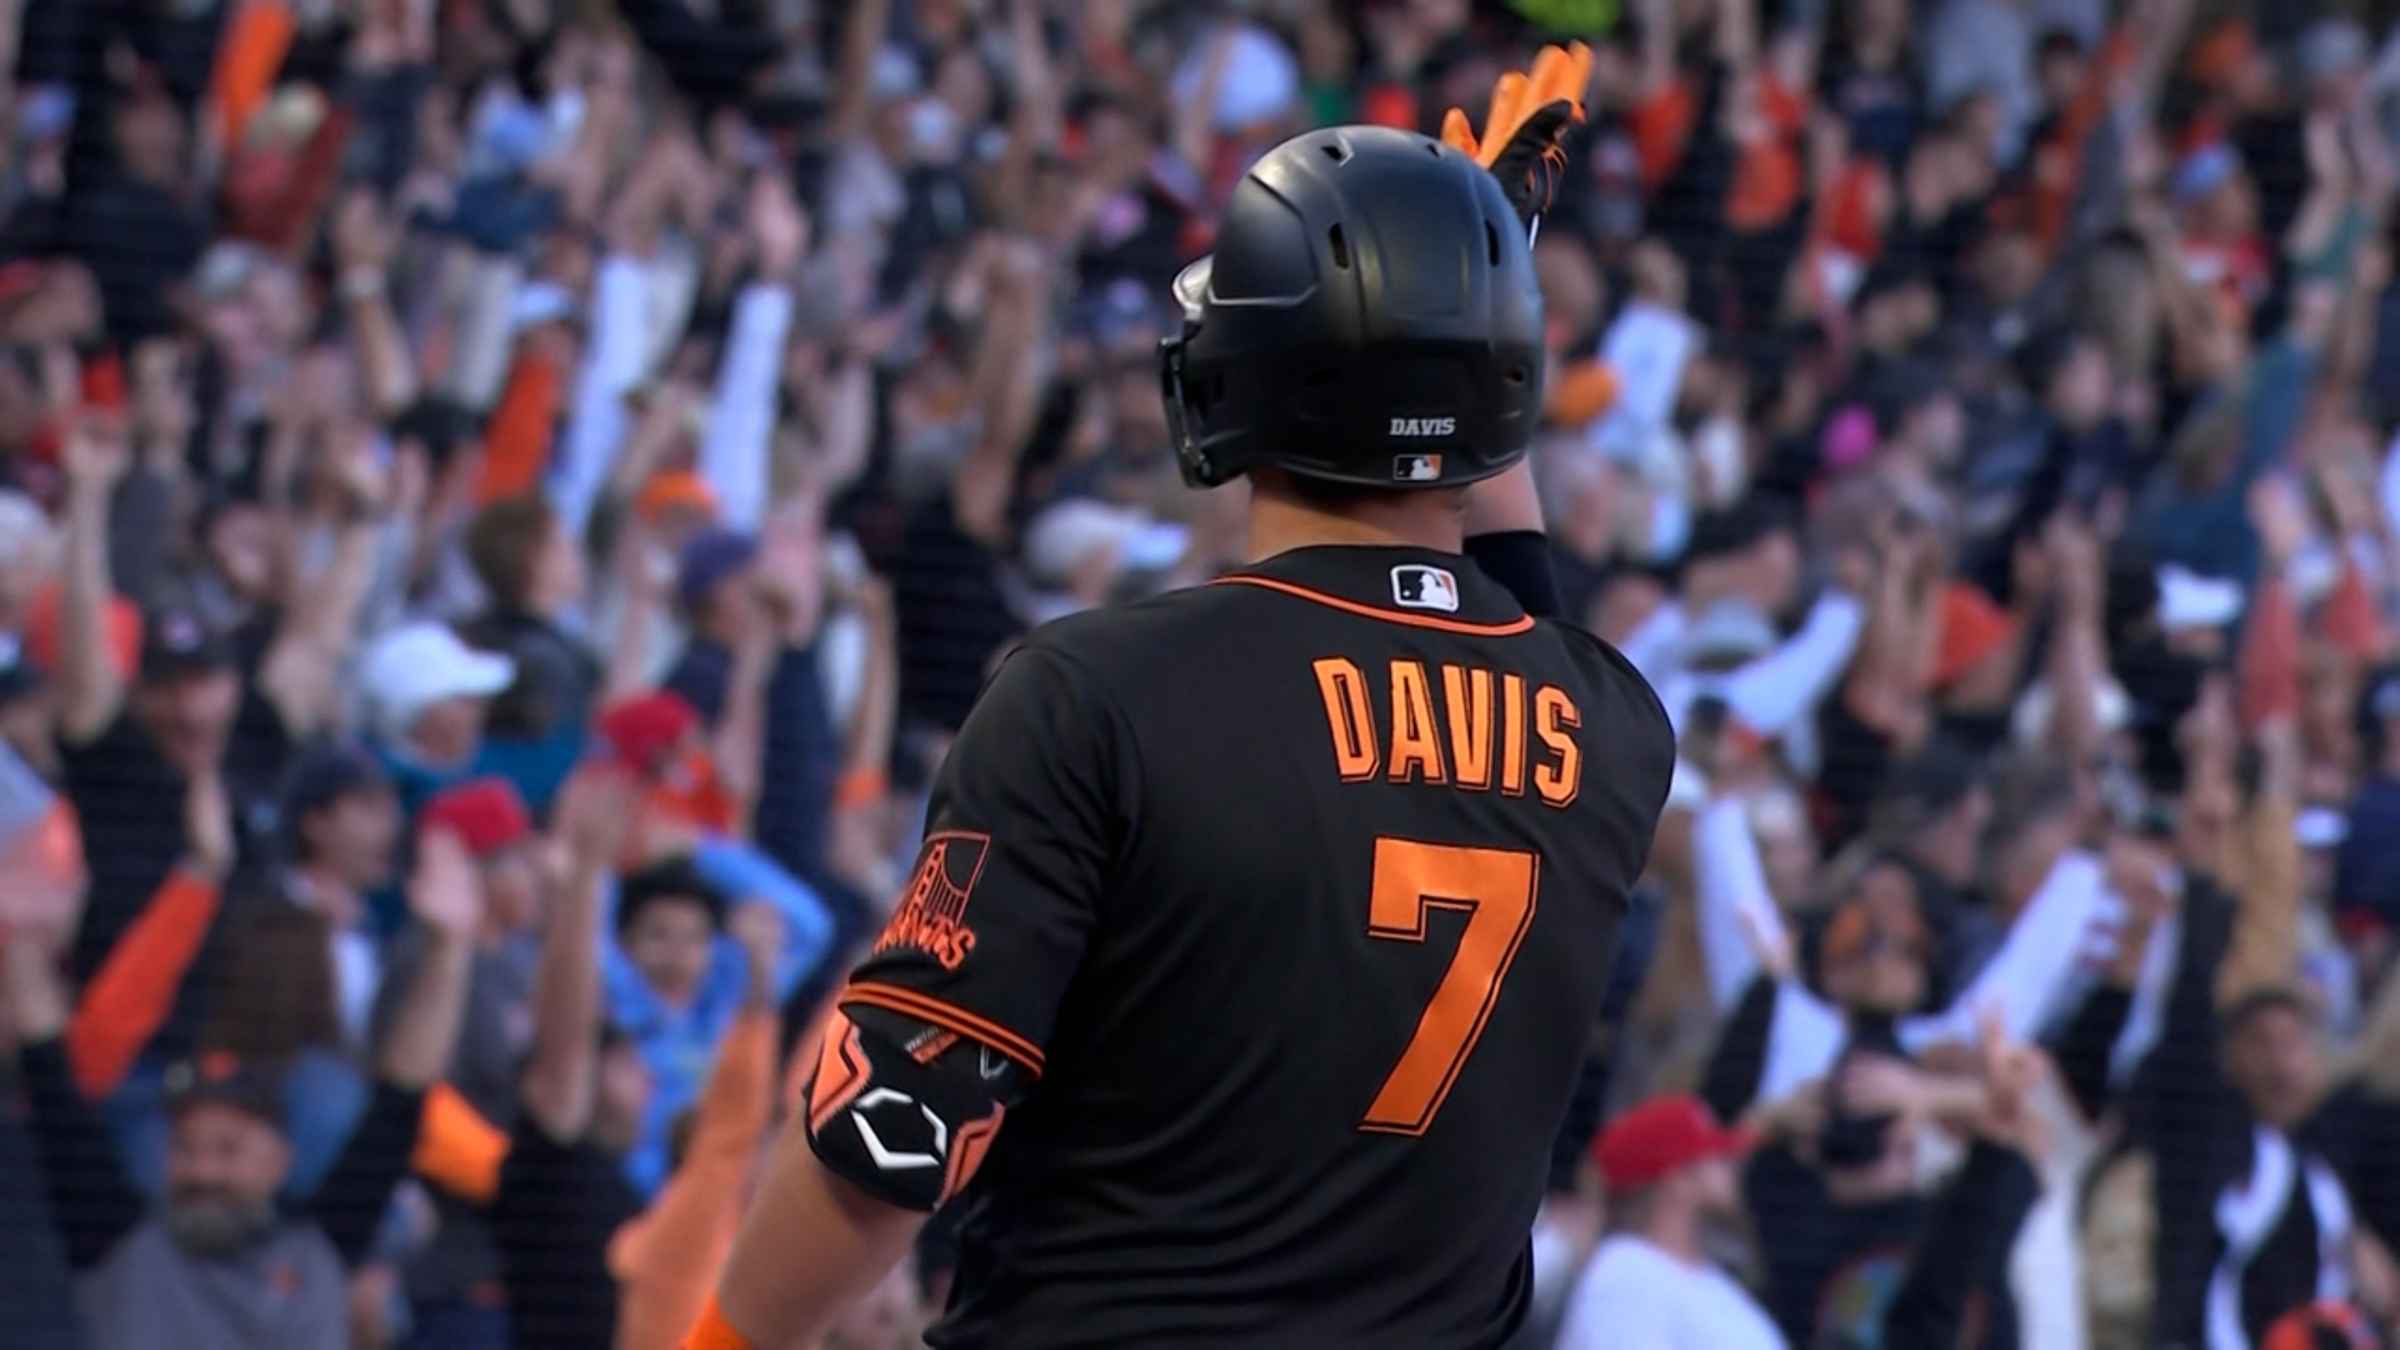 JD Davis - Giants' jersey, Sports